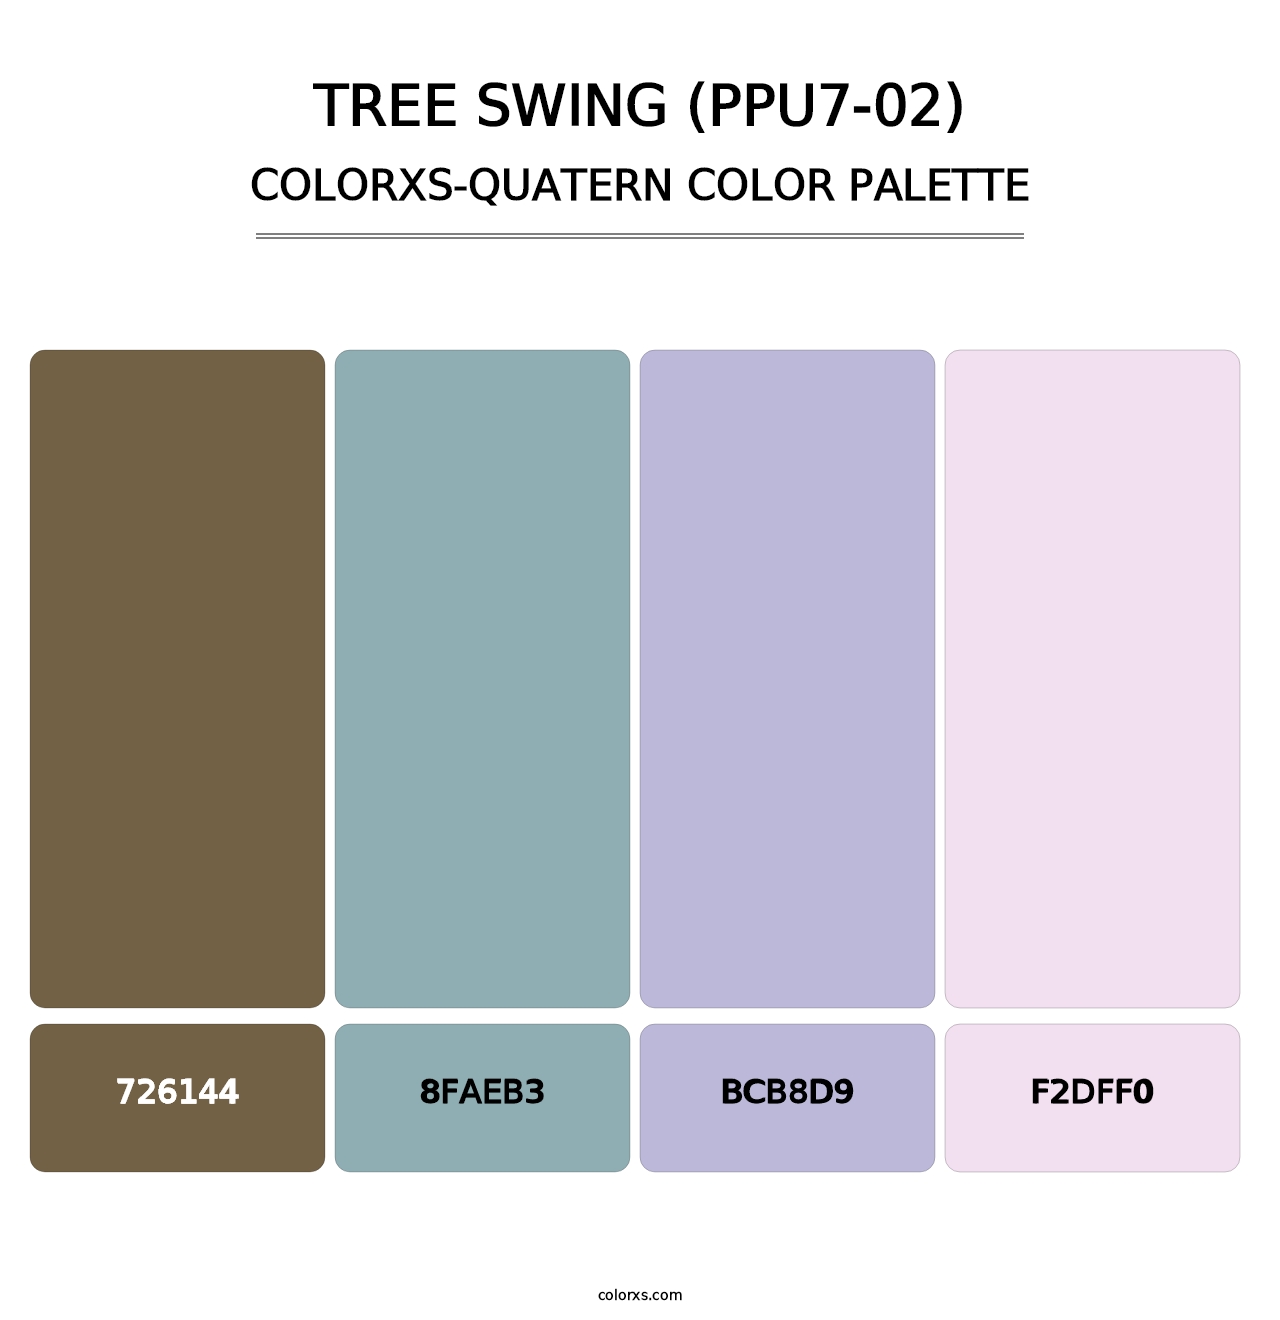 Tree Swing (PPU7-02) - Colorxs Quatern Palette